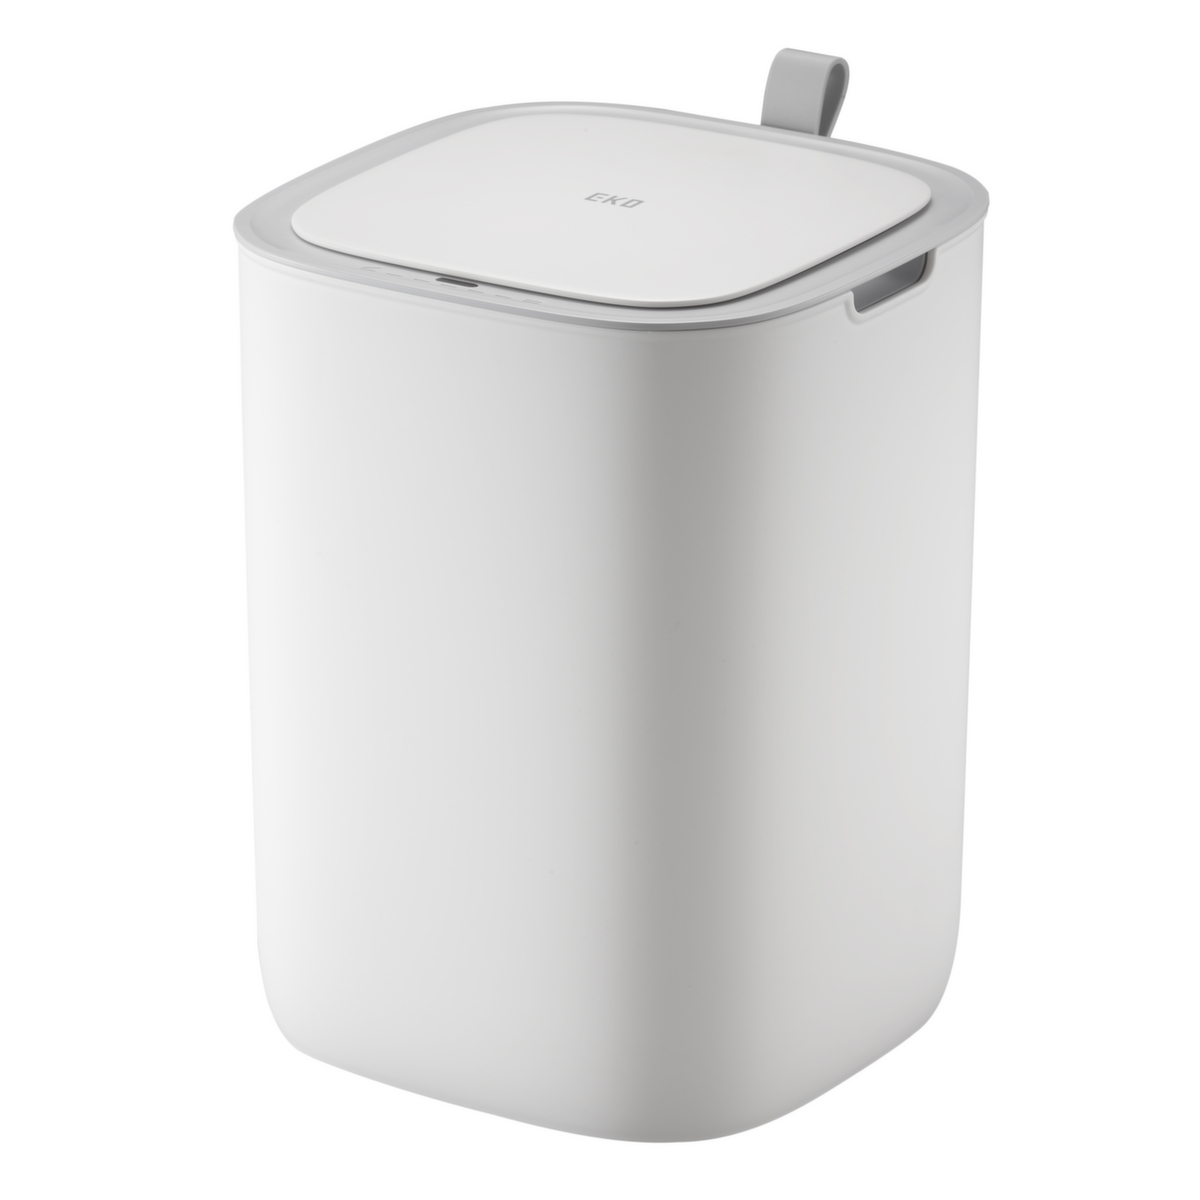 Sensor-Abfallbehälter EKO Morandi Smart aus Kunststoff, 12 l, weiß Standard 1 ZOOM